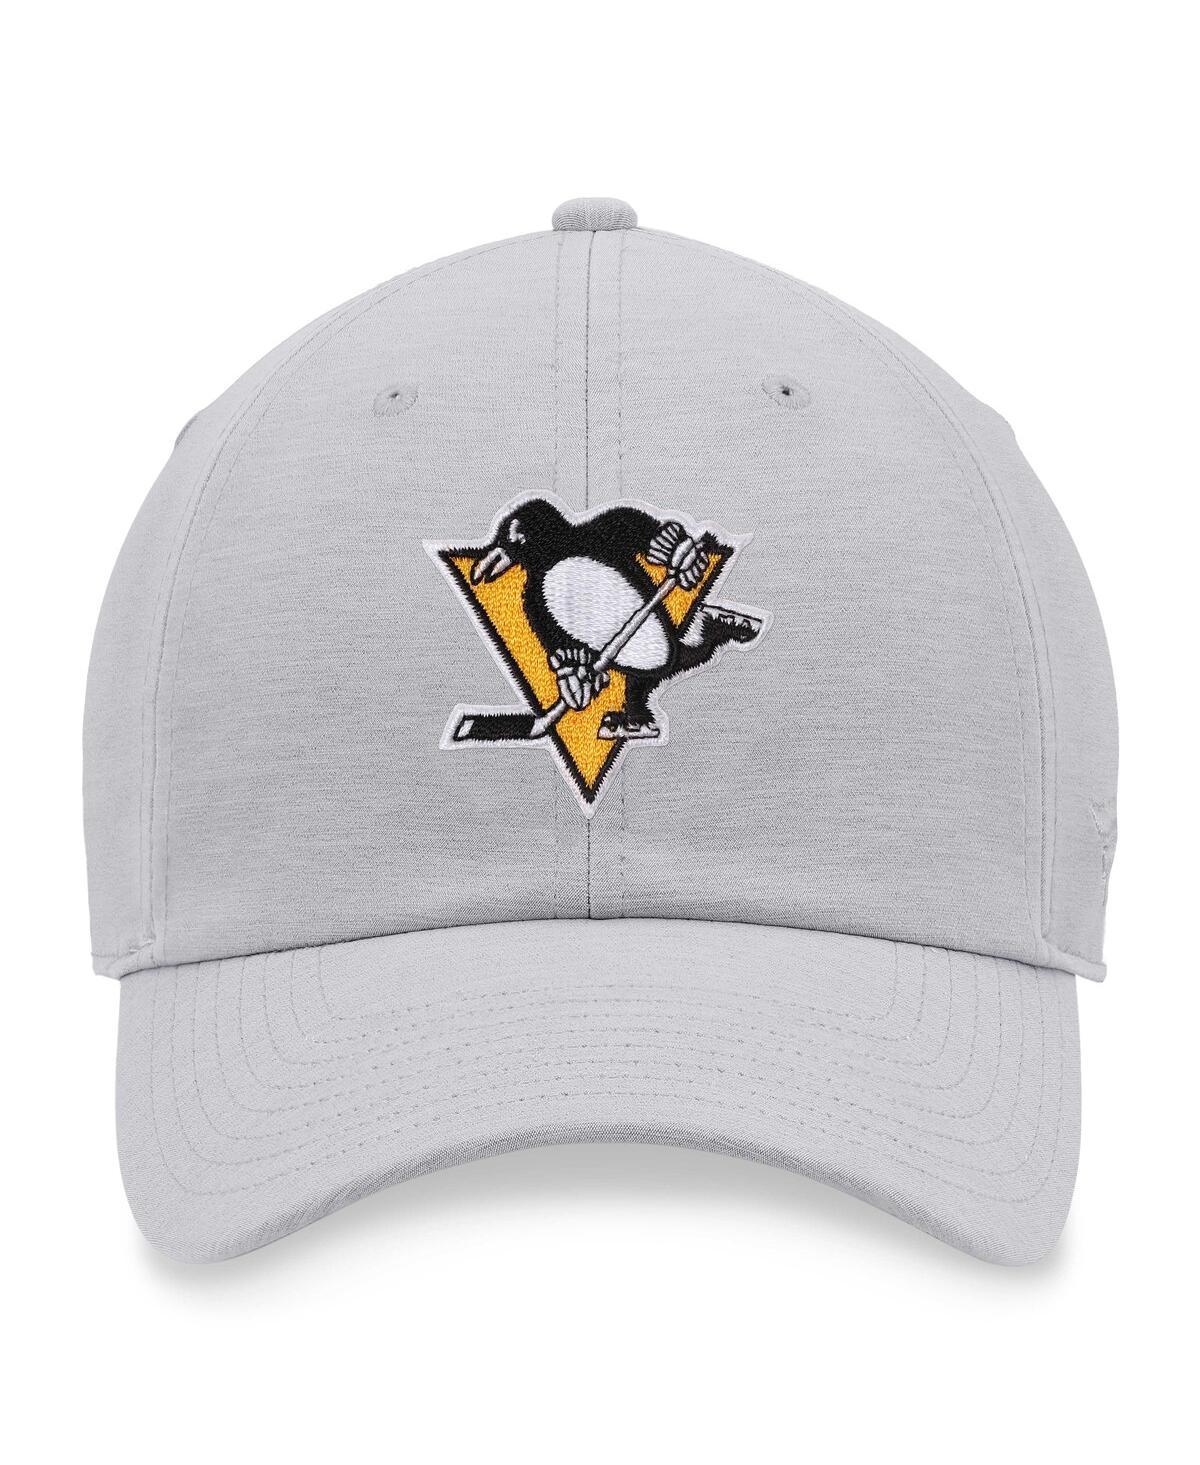 Men's Fanatics Branded Heathered Charcoal Pittsburgh Penguins Big